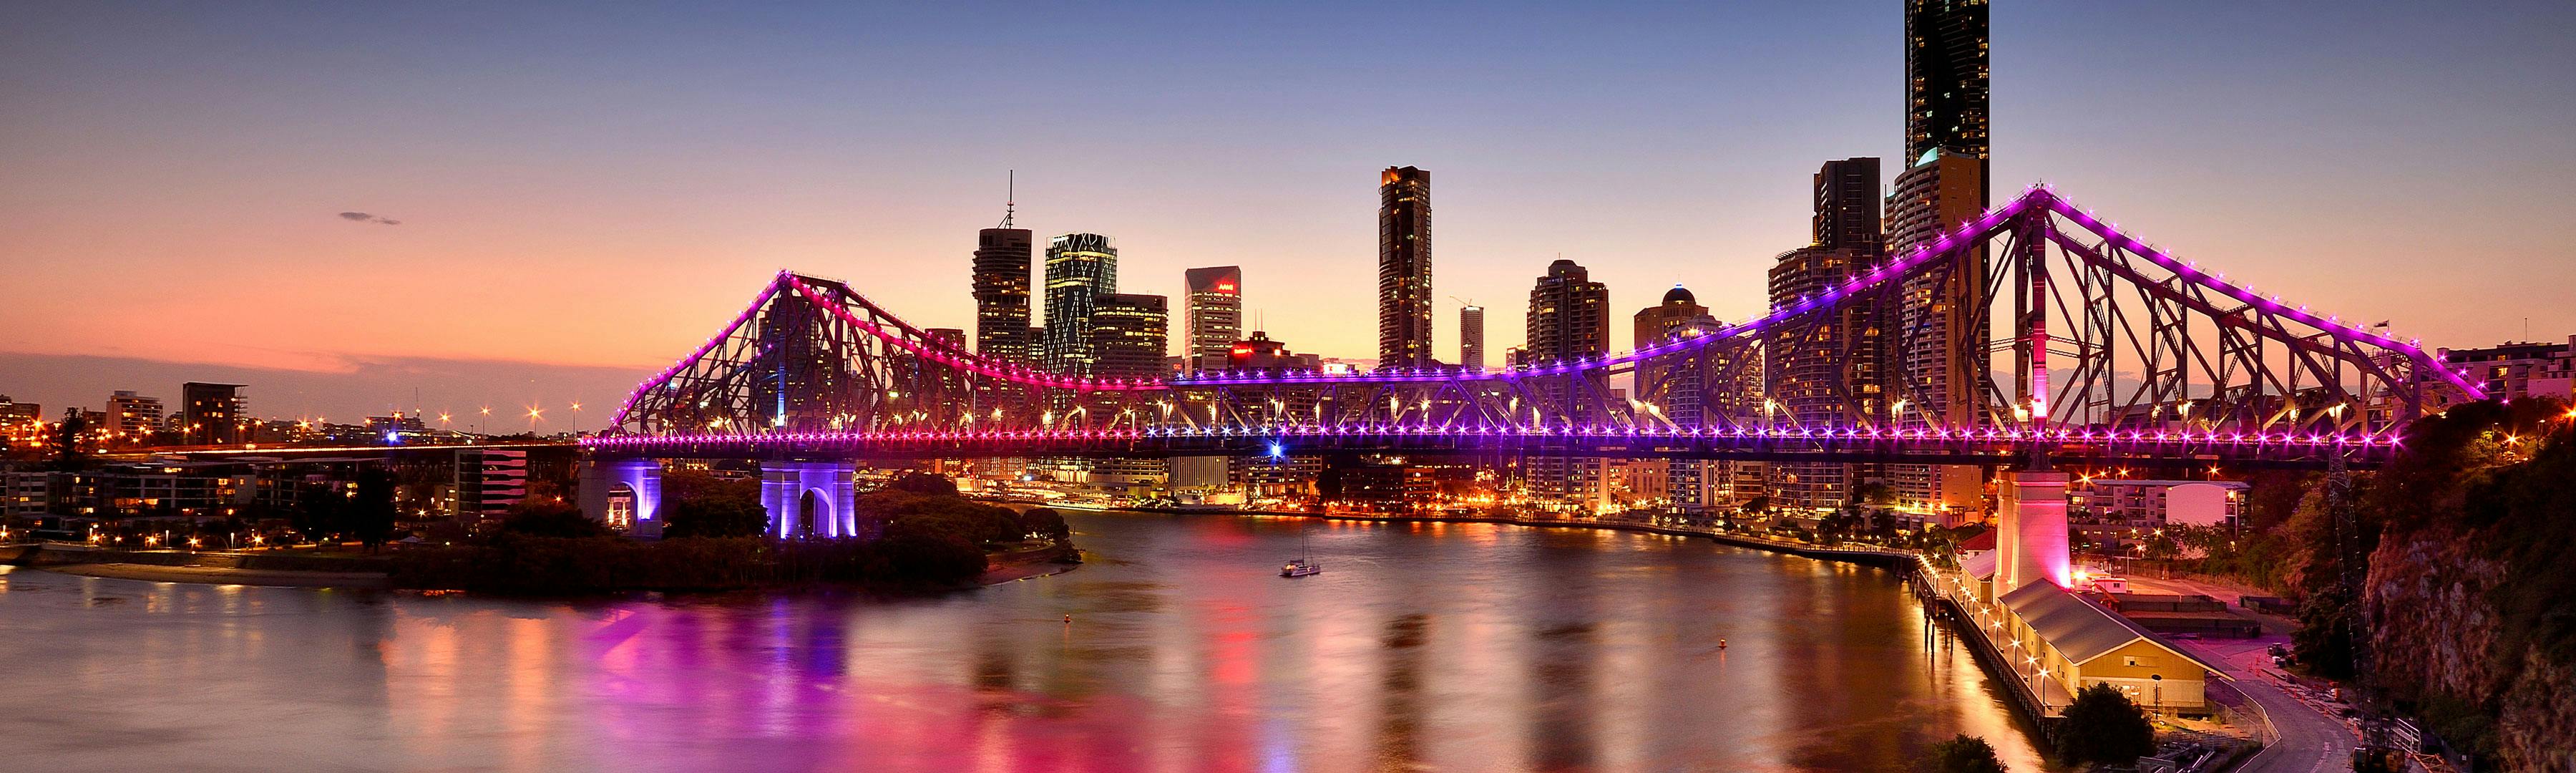 Skyline of Brisbane, Australia at dusk, featuring The Story Bridge